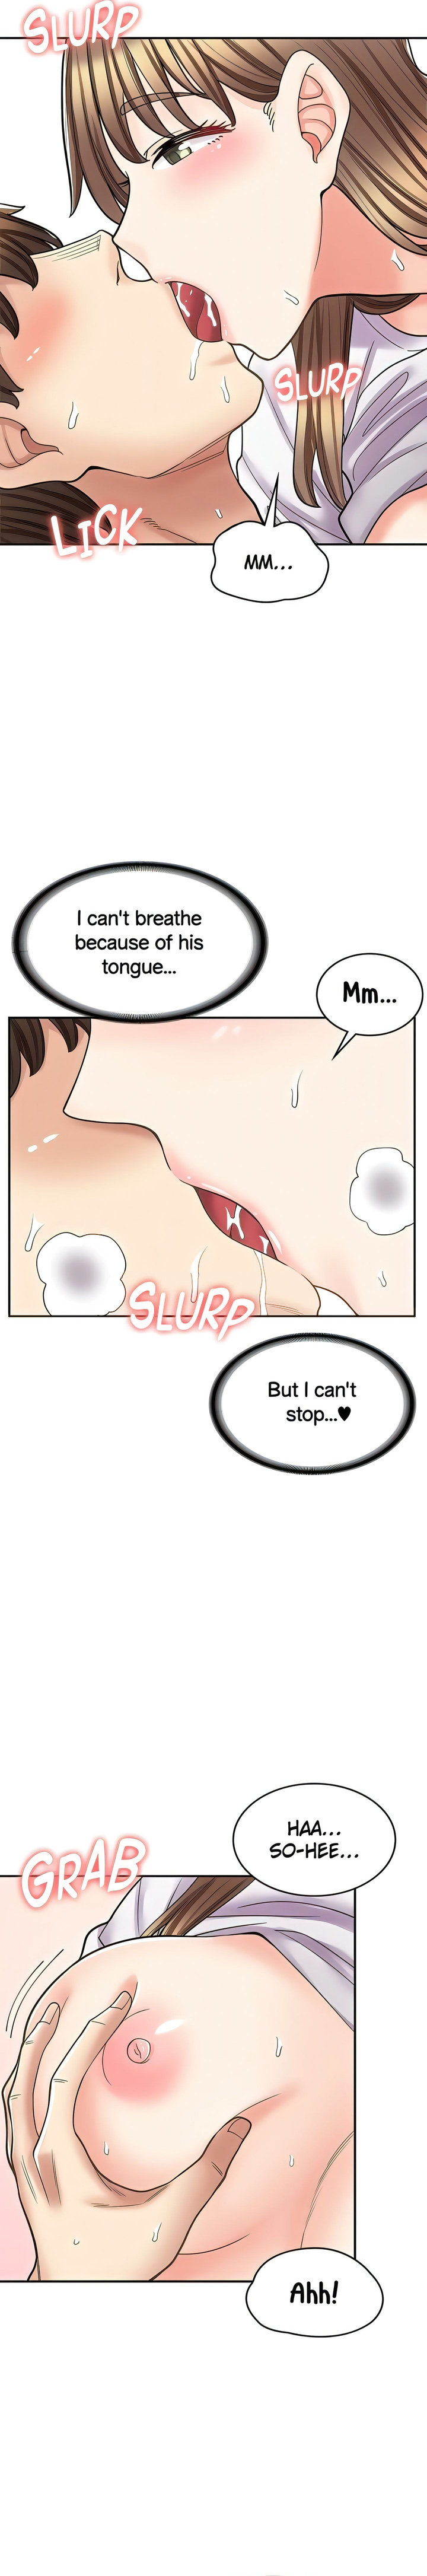 Erotic Manga Café Girls - Chapter 38 Page 4